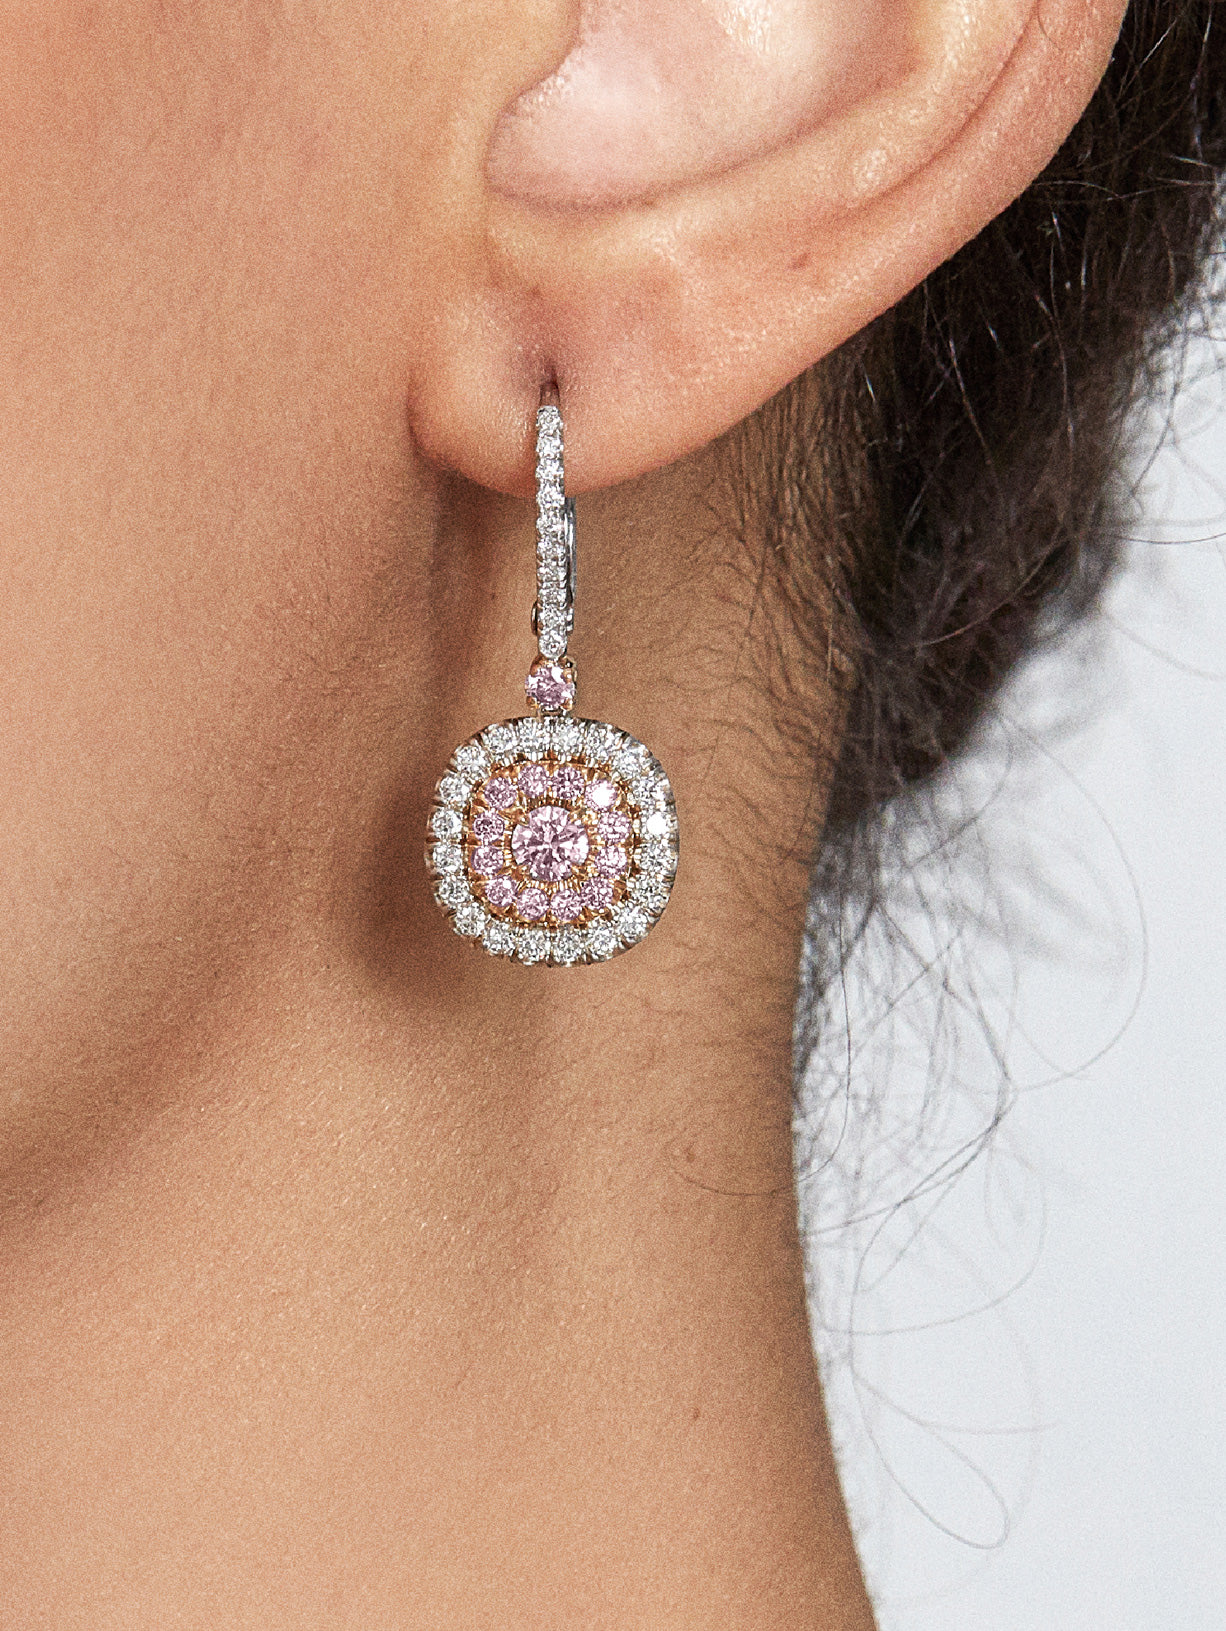 Classic Argyle Pink Diamond Halo Drop Earrings by JFINE worn by fashion model